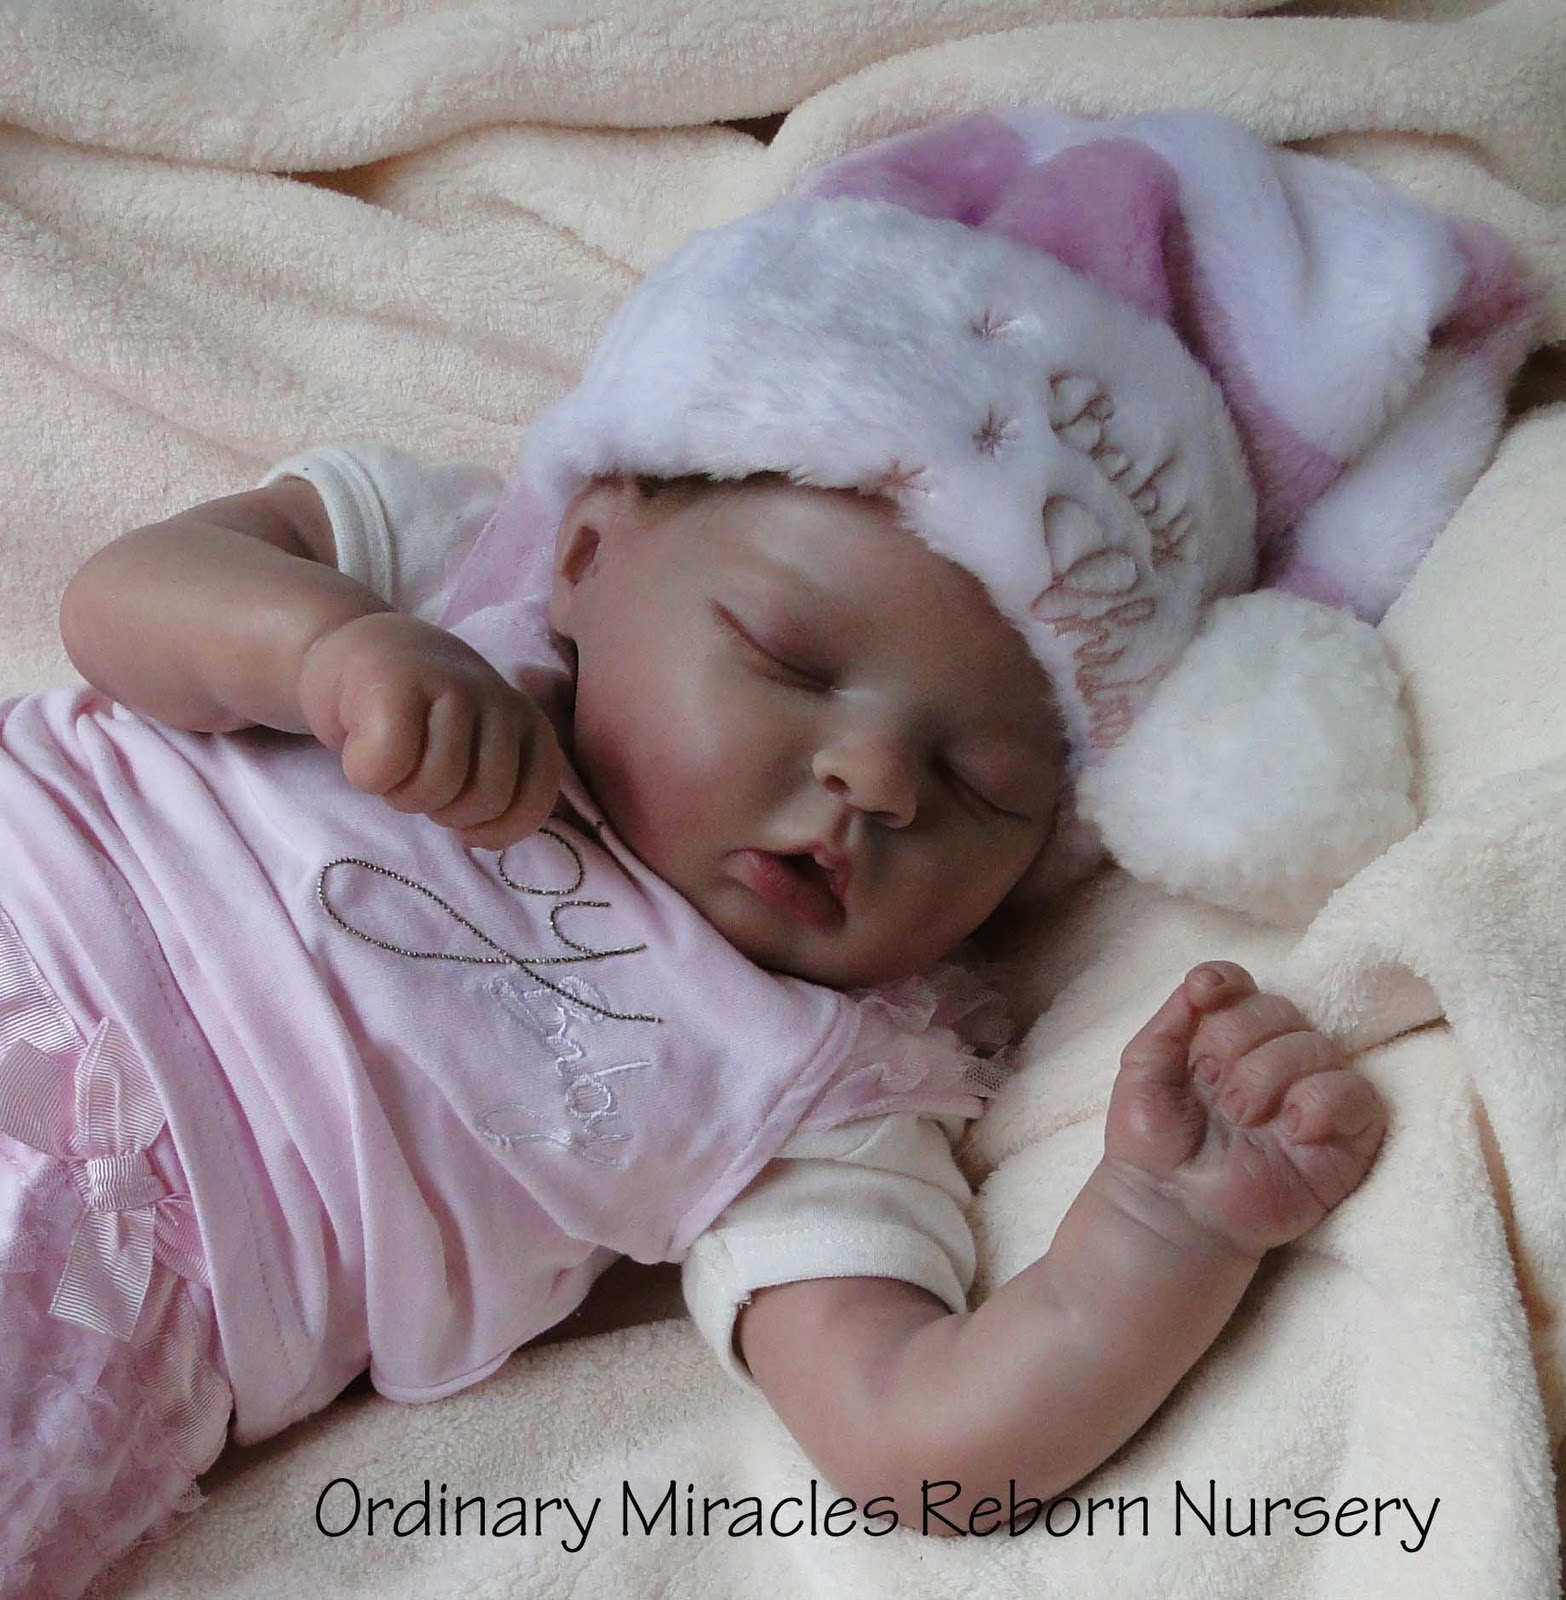 TINKERBELL NURSERY Helen Jalland reborn baby boy doll ...